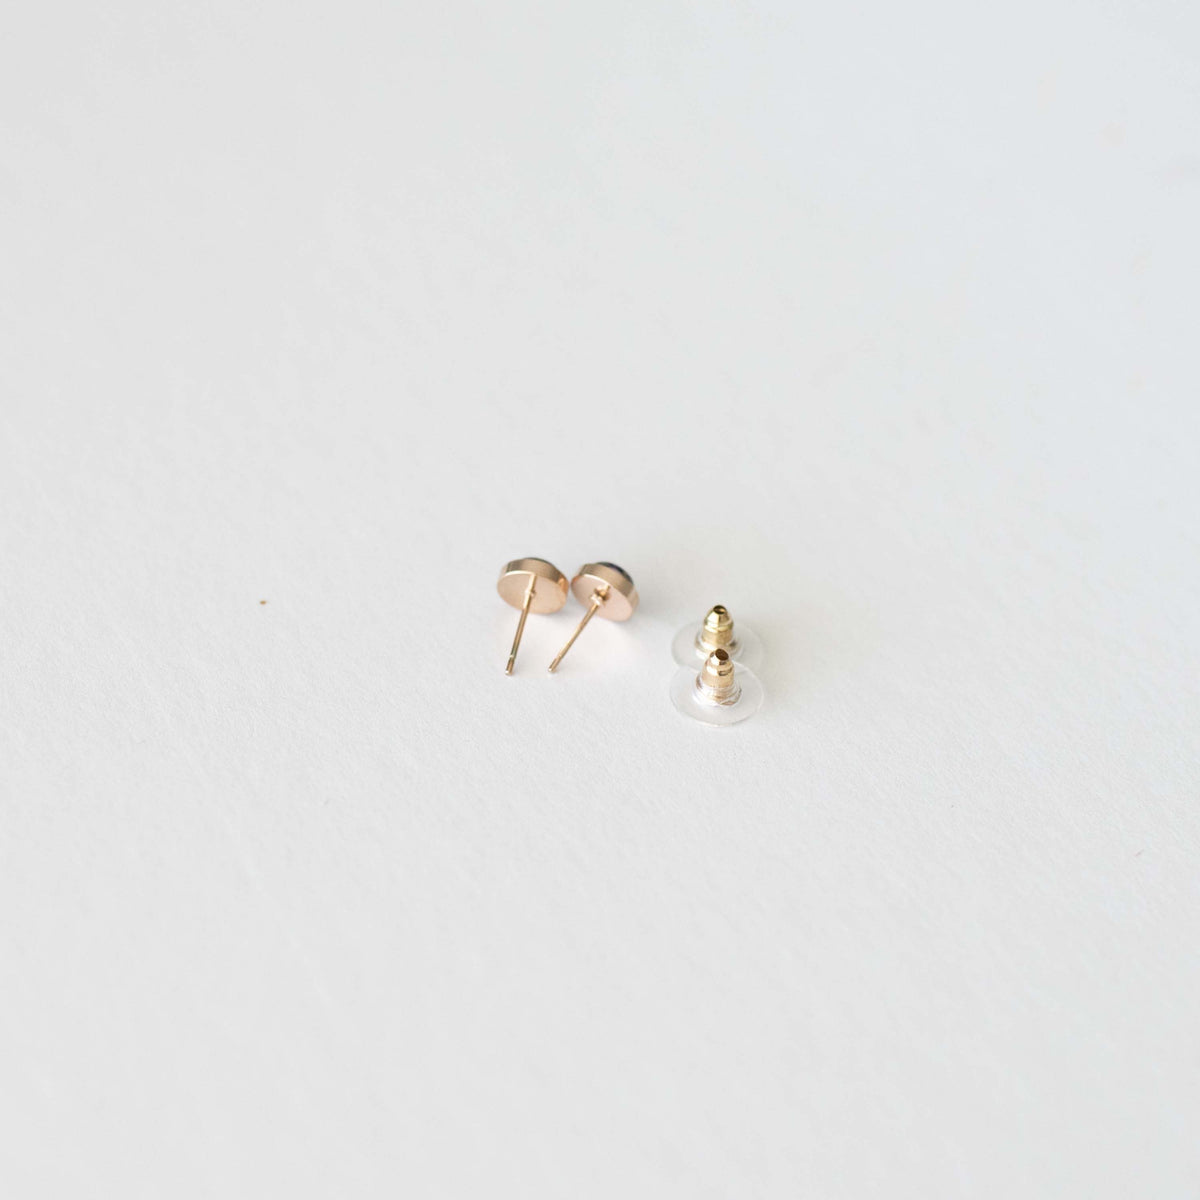 Tiger + Lilly - Stud Earrings - Earrings - Hypoallergenic Stainless Steel - Nickel Free - Lever Back Earrings - Dangle Earrings - Mini Earrings - Rose Gold Earrings - Pearl Earrings